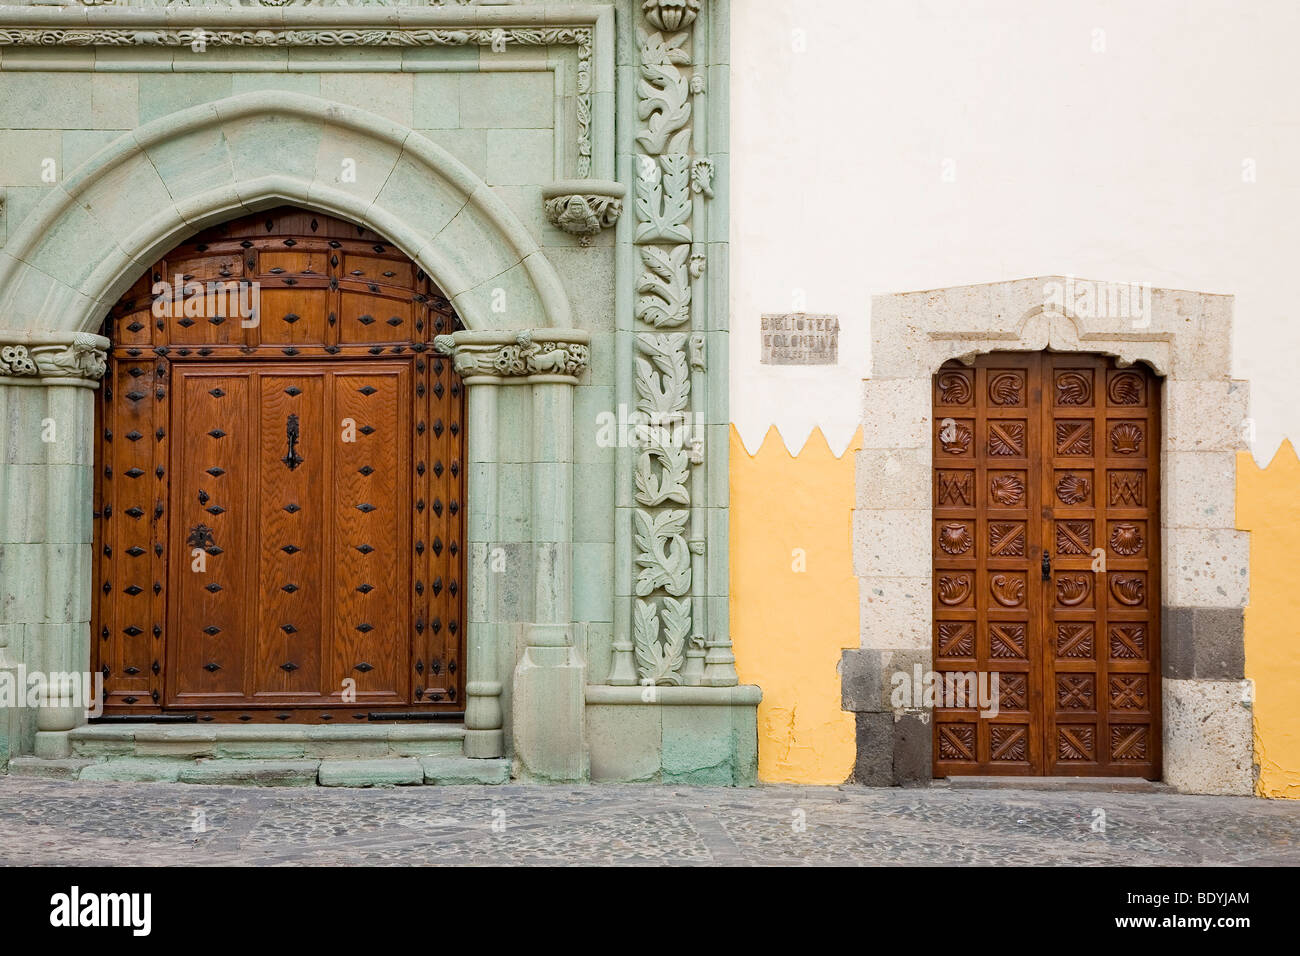 Ornate doorways in Vegueta, Las Palmas Stock Photo